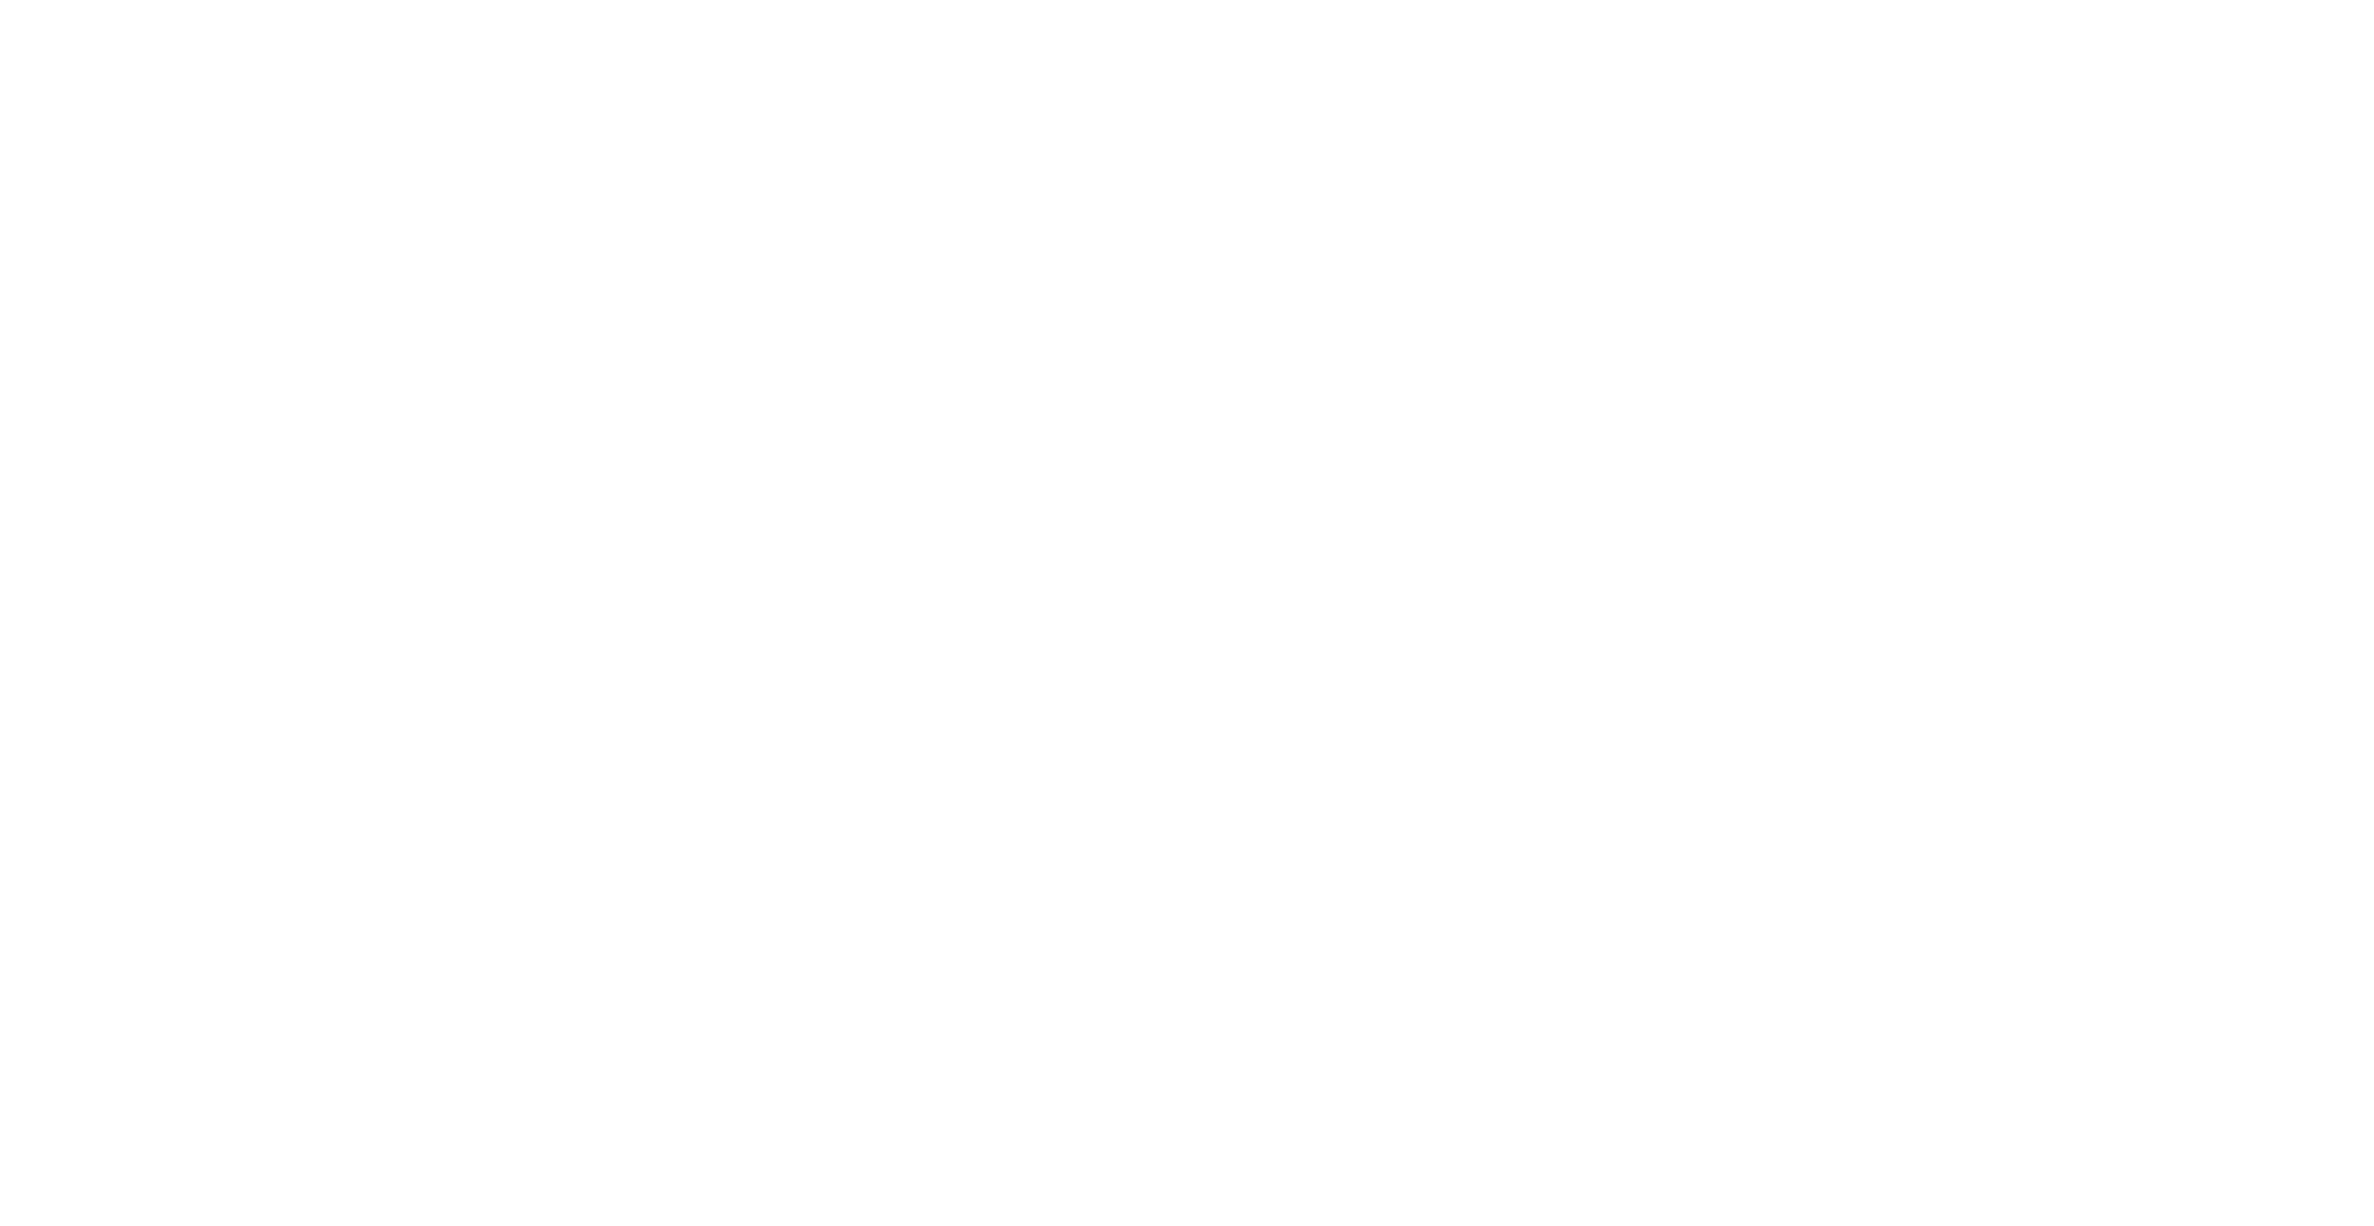 Center for the Future